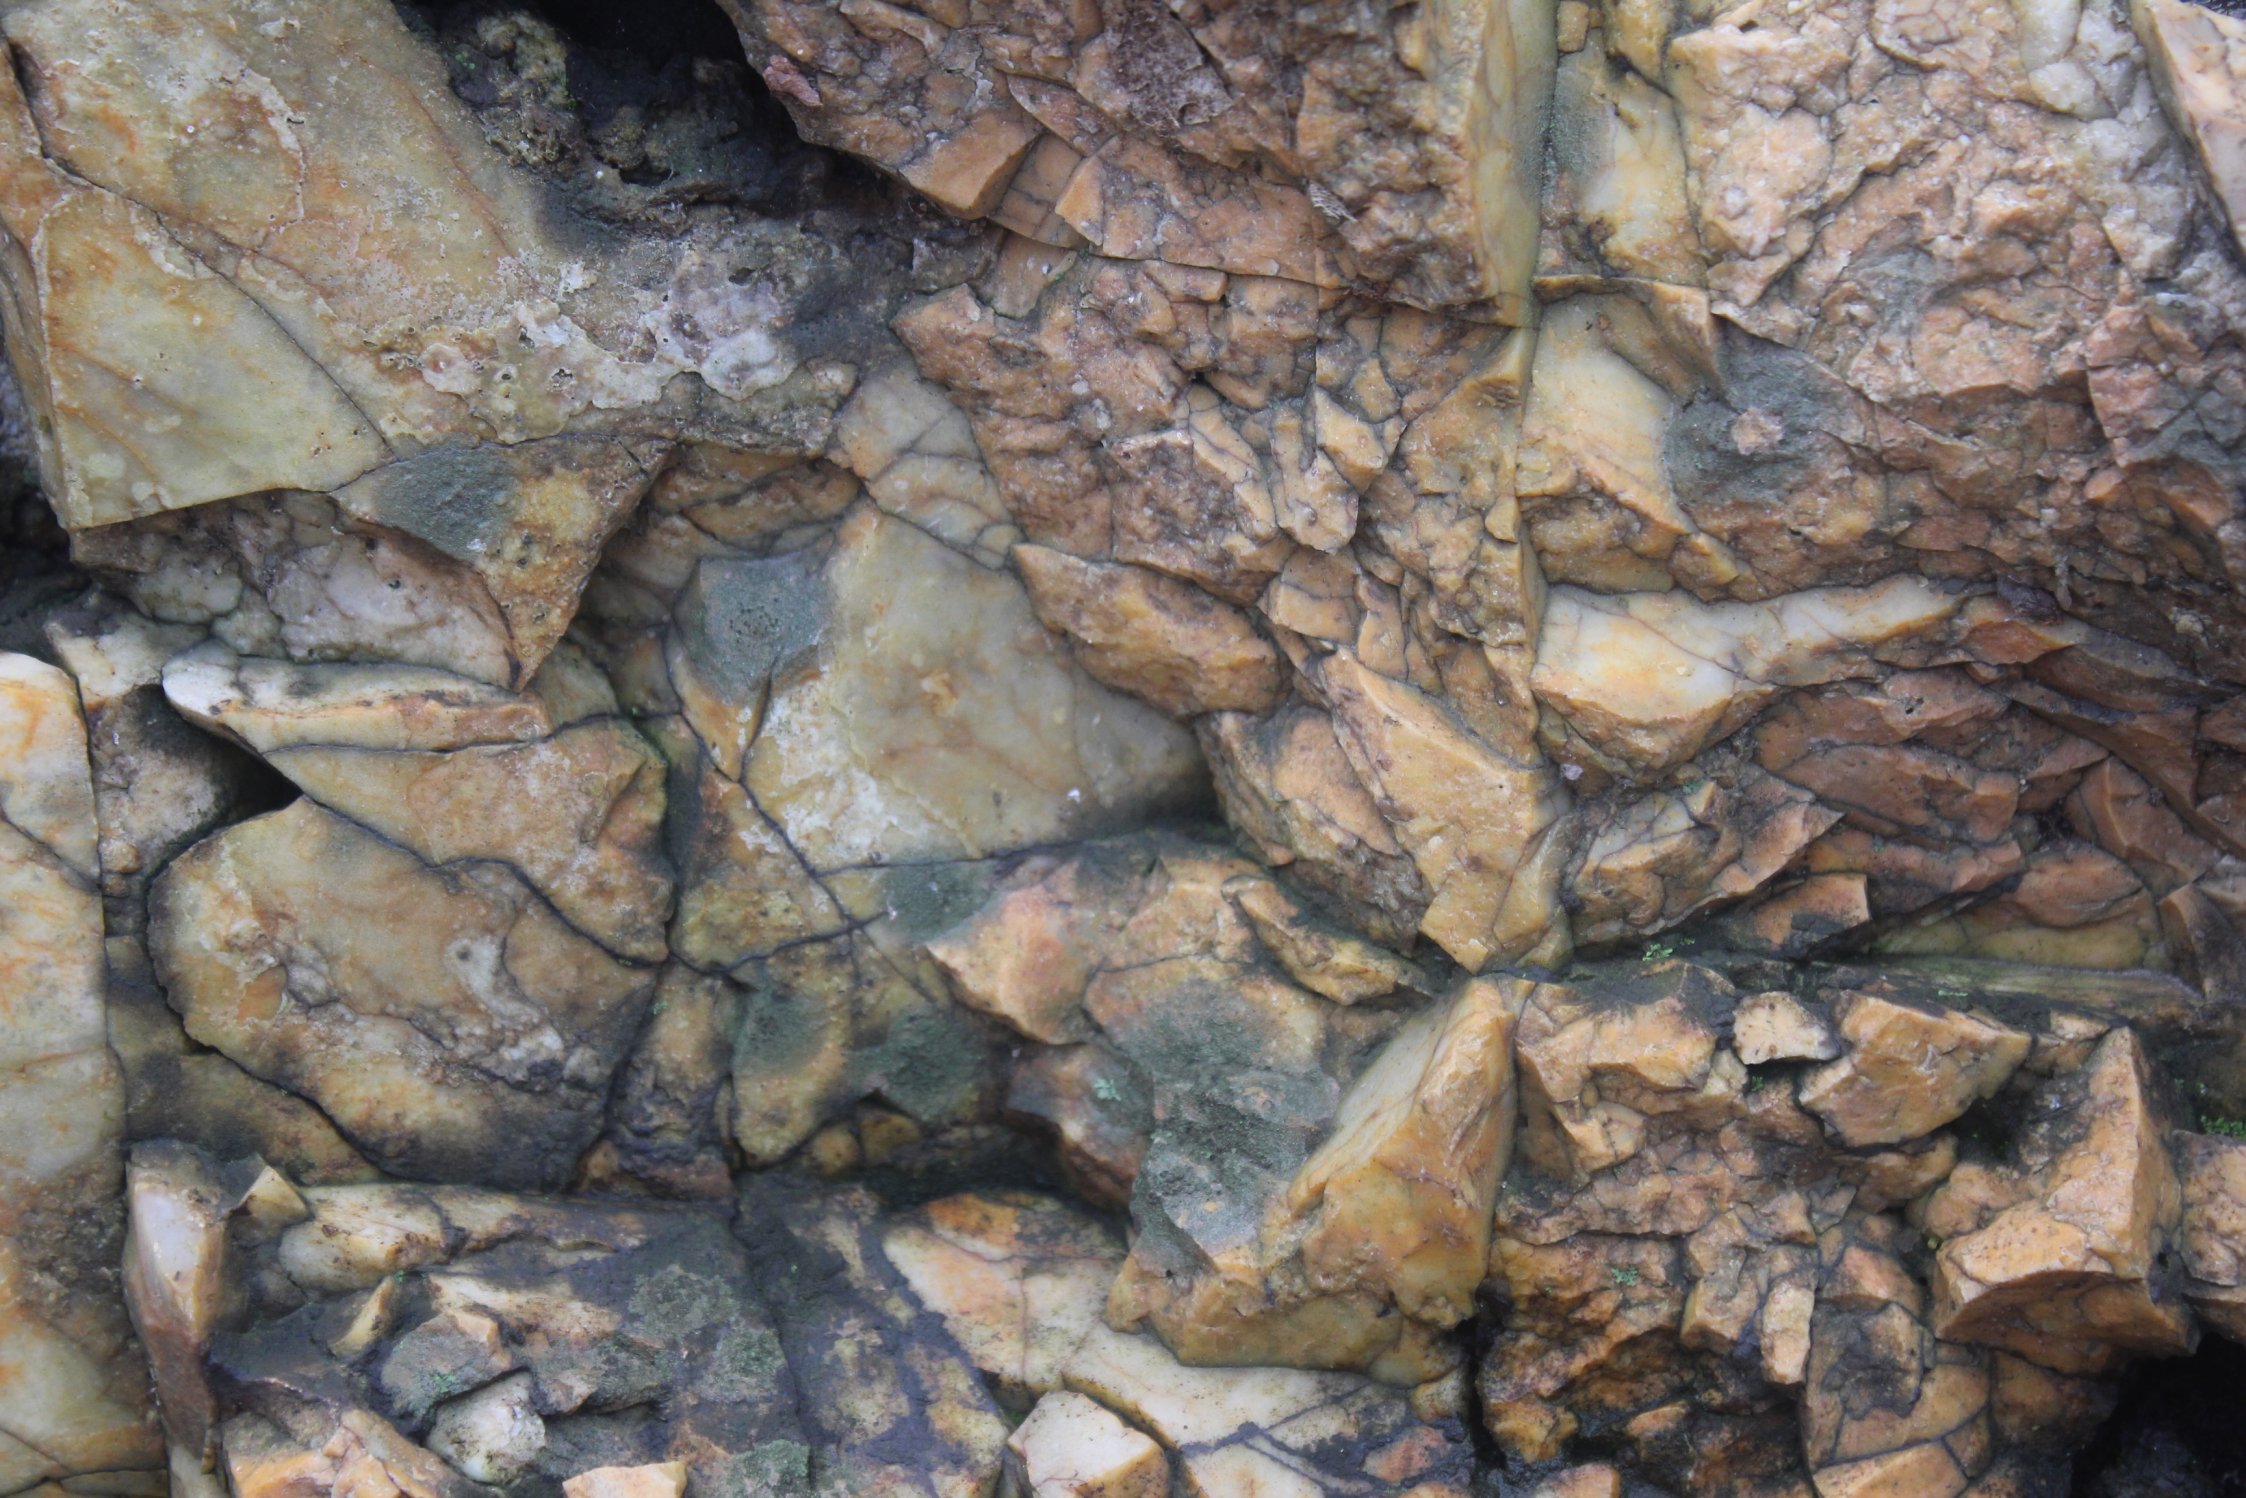 jagged rock texture image - Free stock photo - Public Domain photo ...